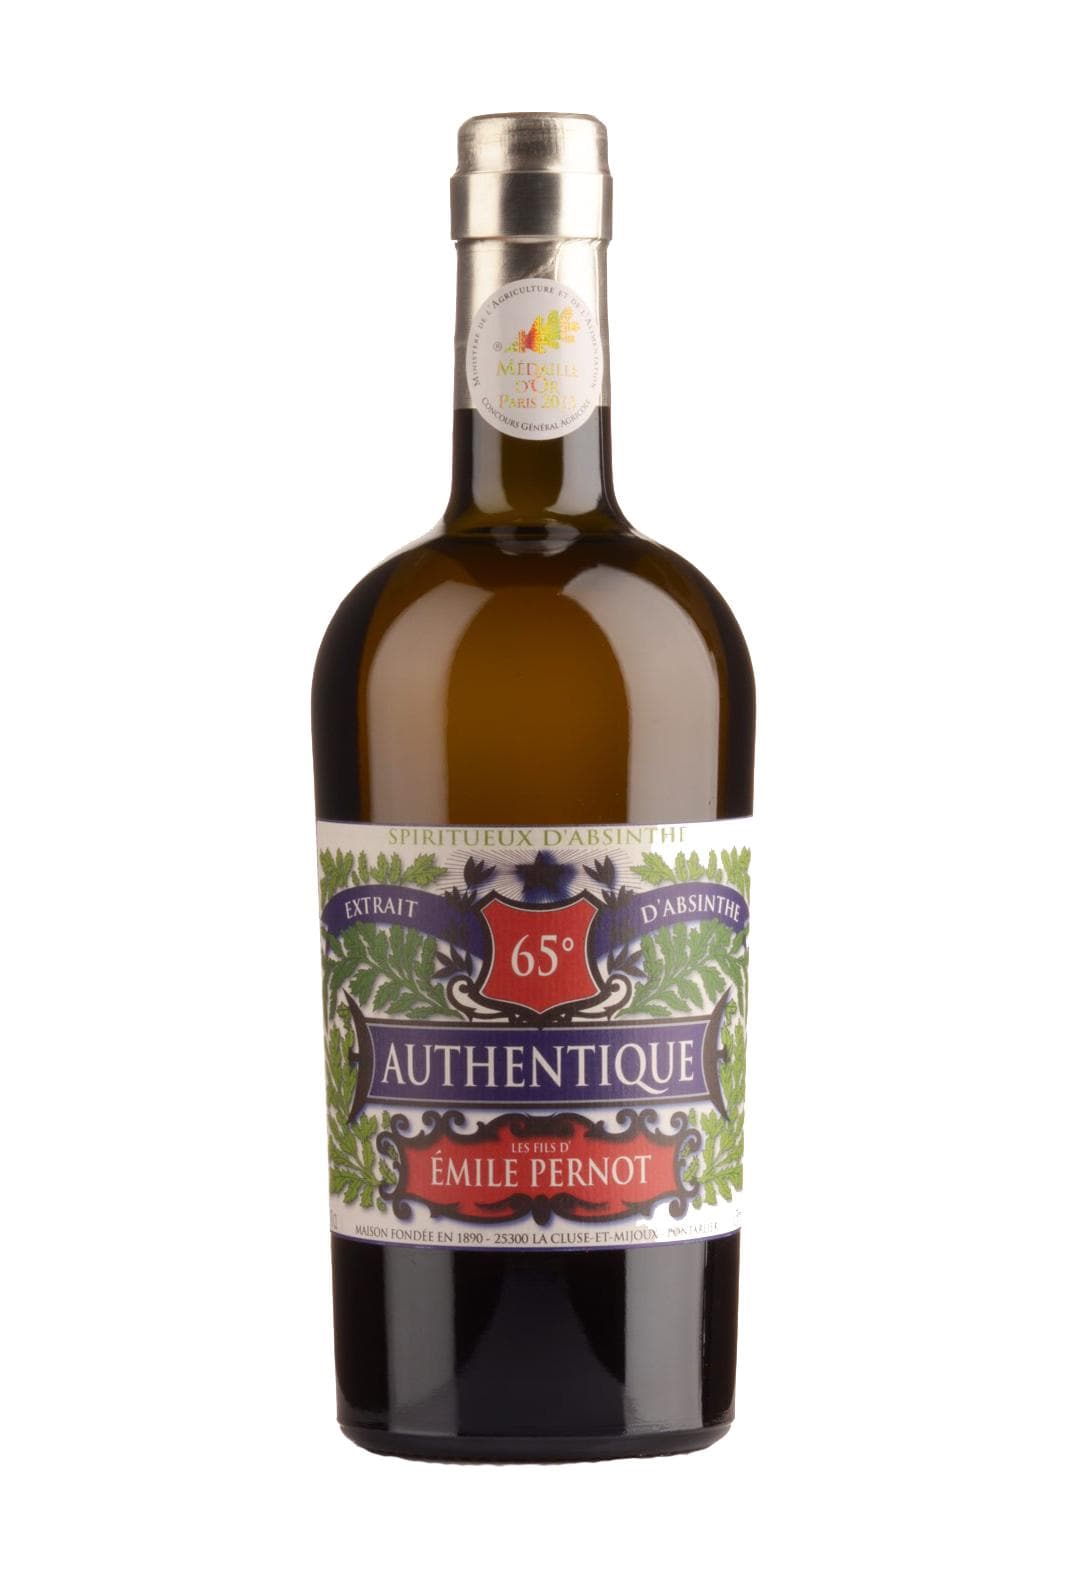 Distillerie Pernot Absinthe Authentique (Grande Absinthe de Pontarlier) 65% 700ml | Liqueurs | Shop online at Spirits of France